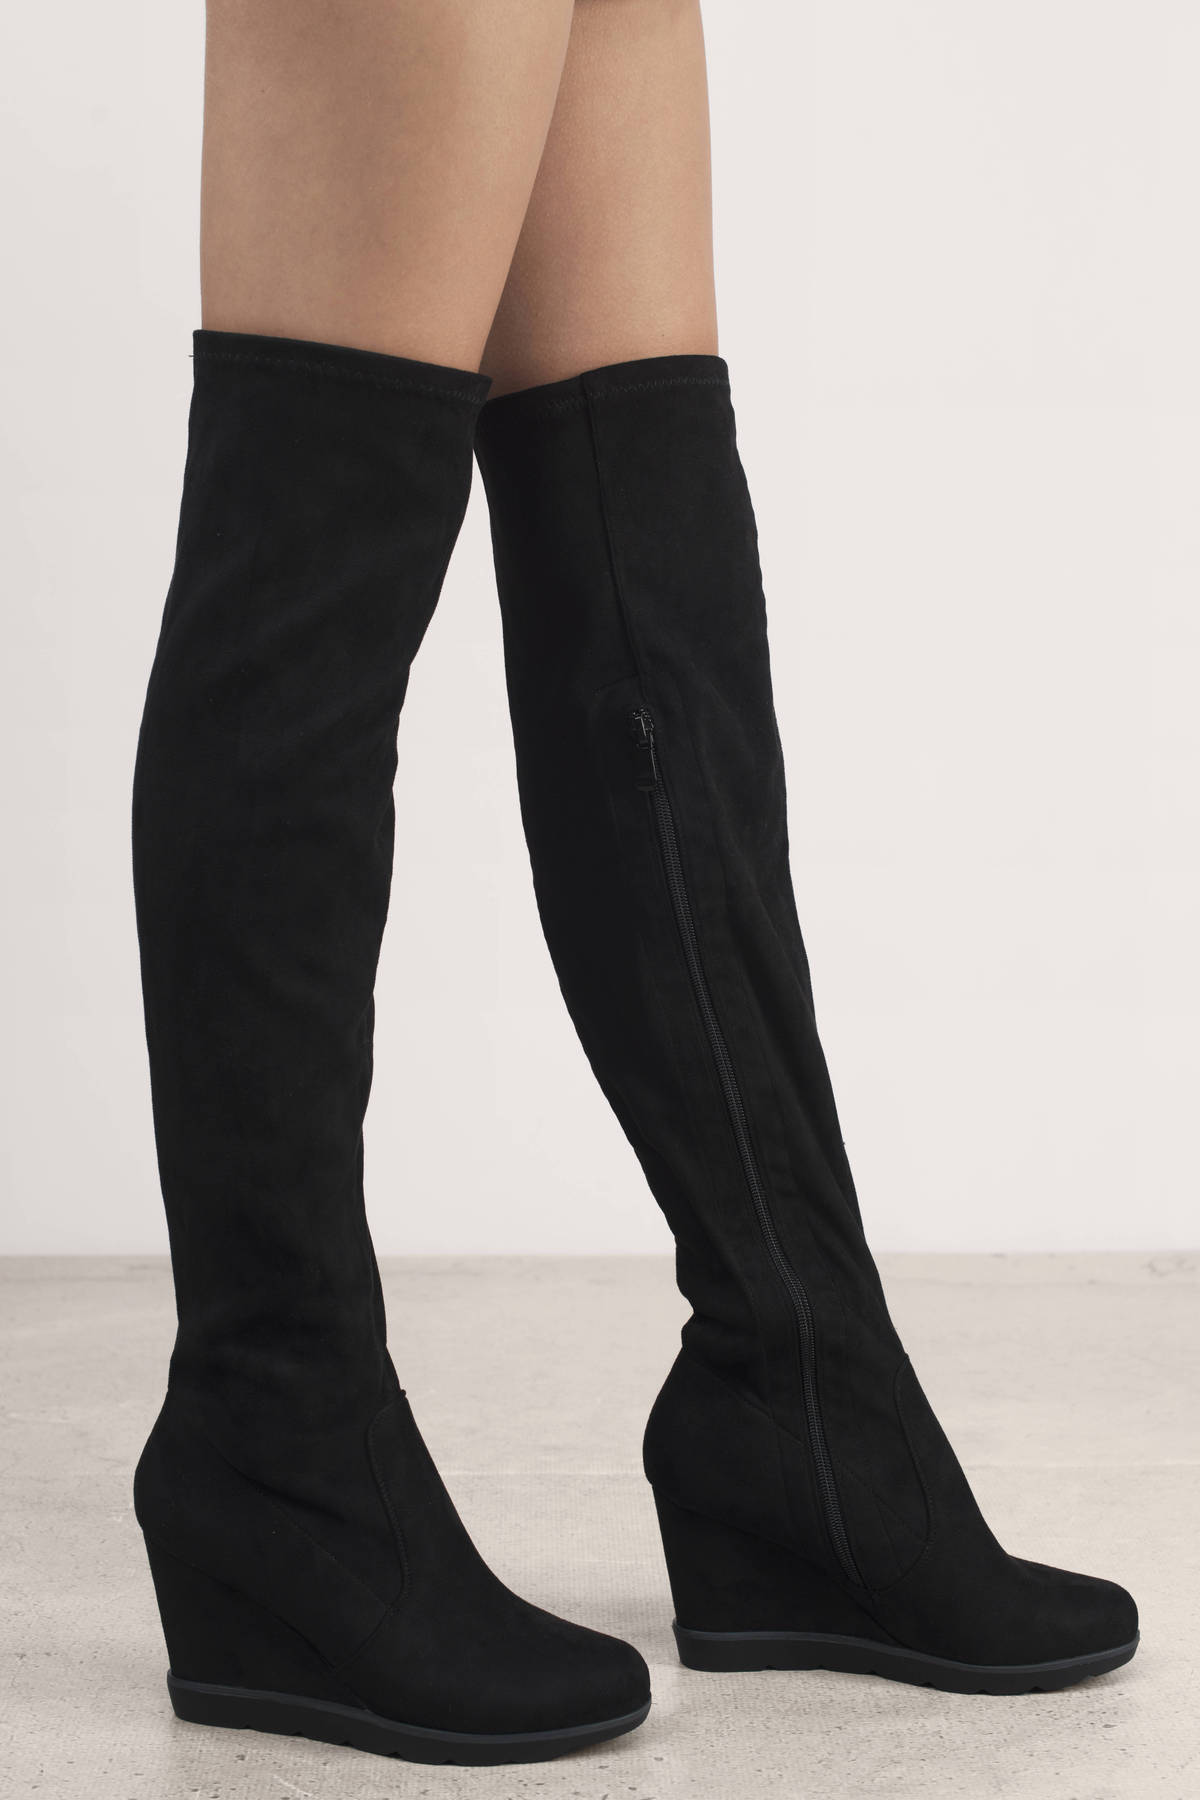 Diana Suede Wedge Boots in Black - $48 | Tobi US